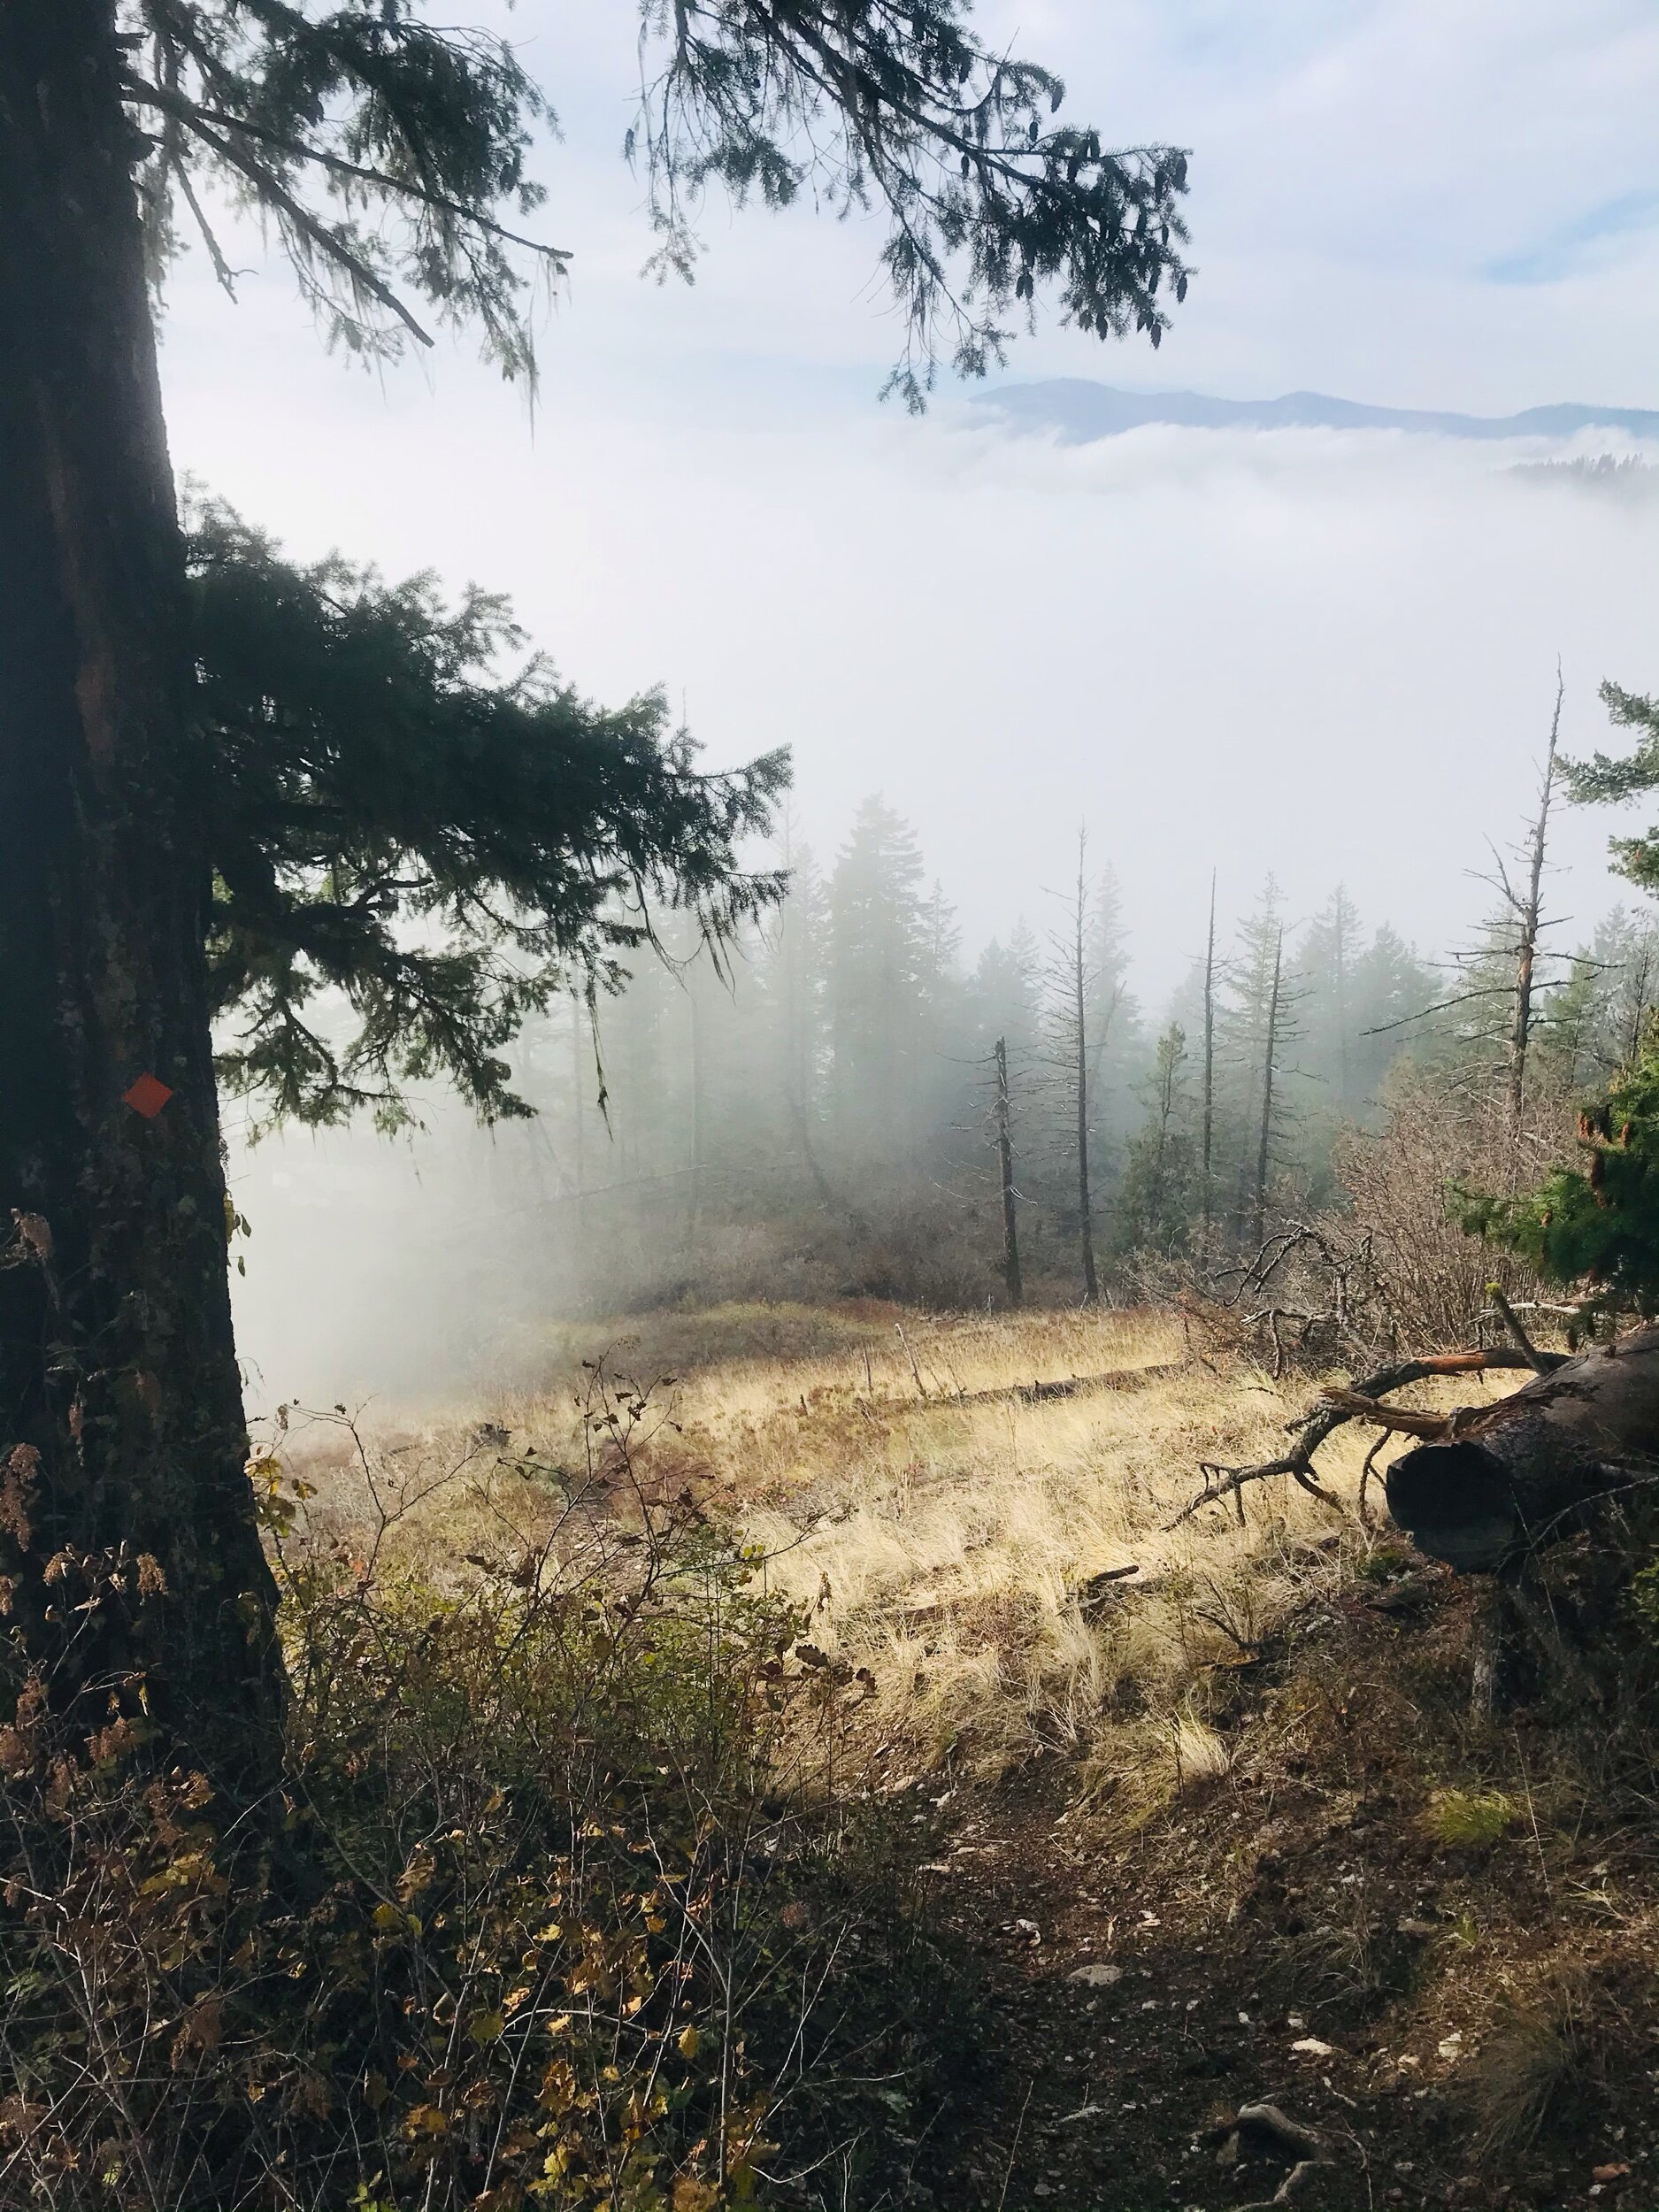 Shuswap Adventure Girl | White Lake Lookout Trail B.C.